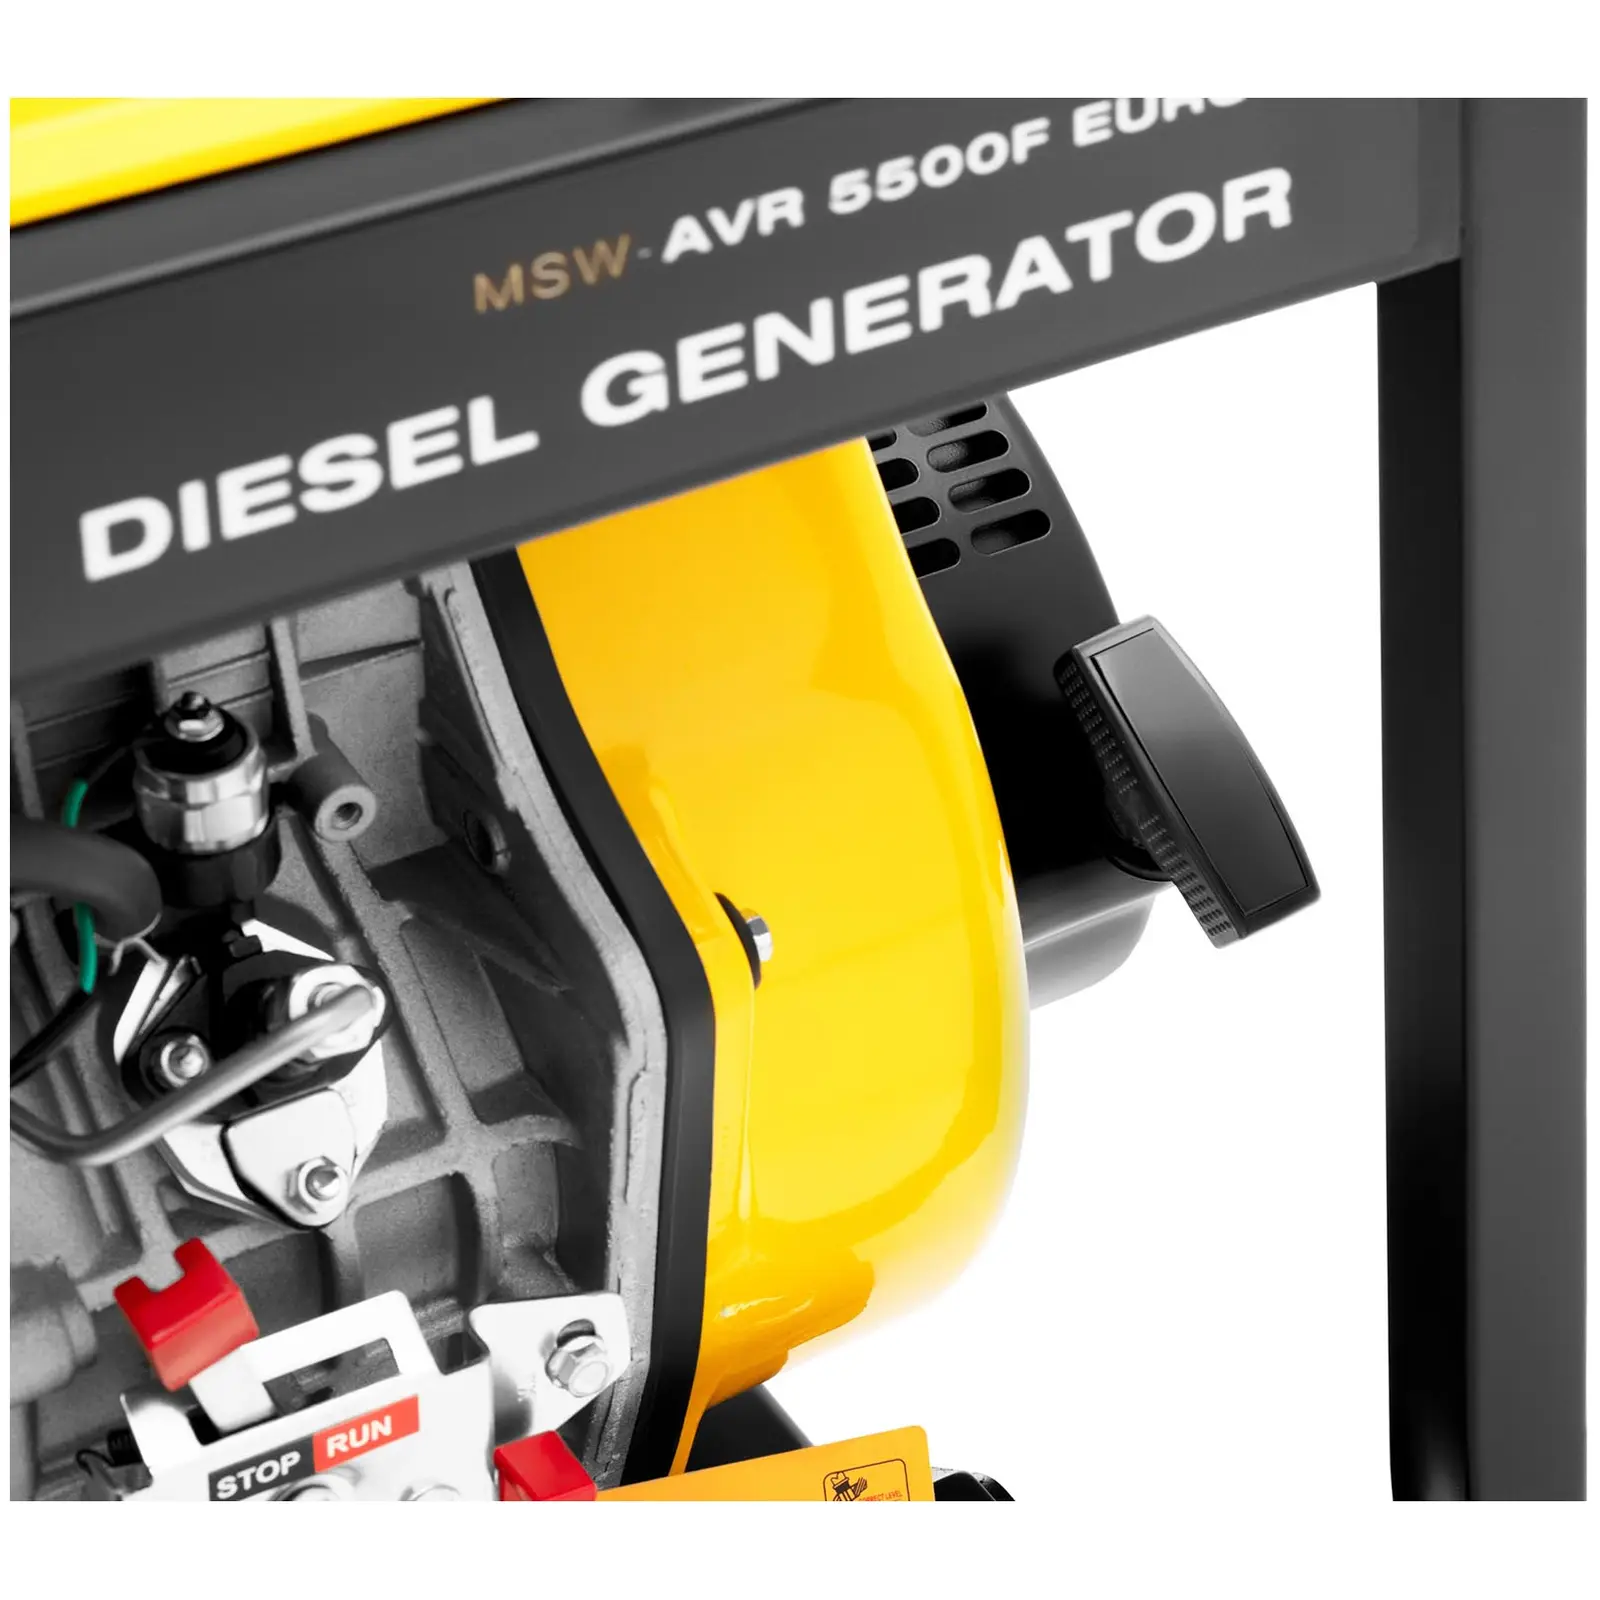 Brugt Dieselgenerator - 1830/5500 W - 12,5 l - 240/400 V - mobil - AVR - Euro 5